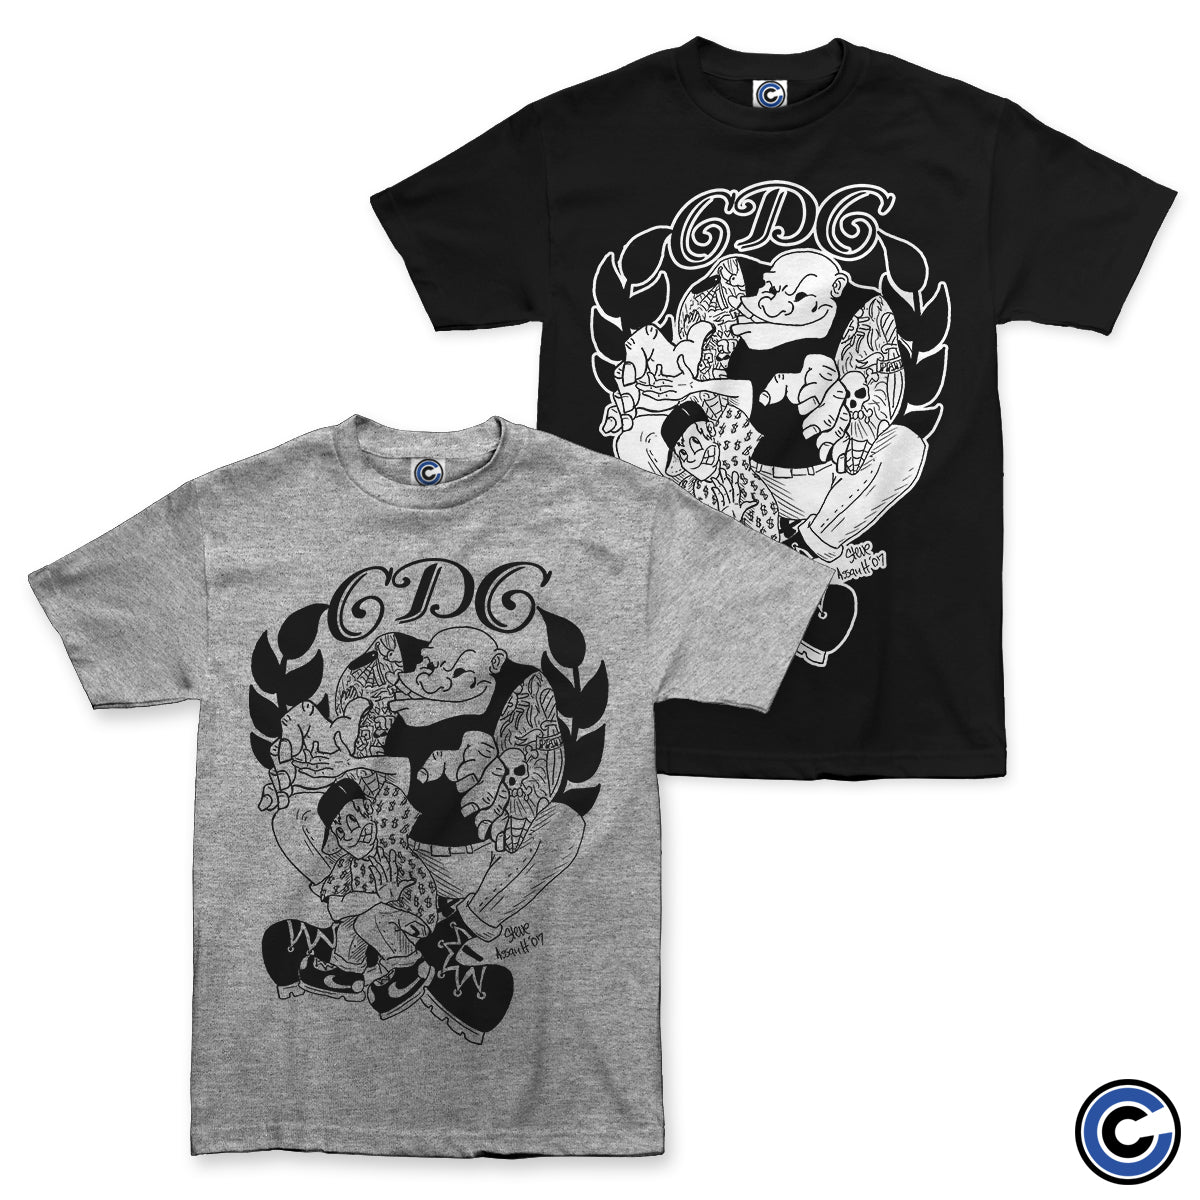 CDC "Ghetto" Shirt